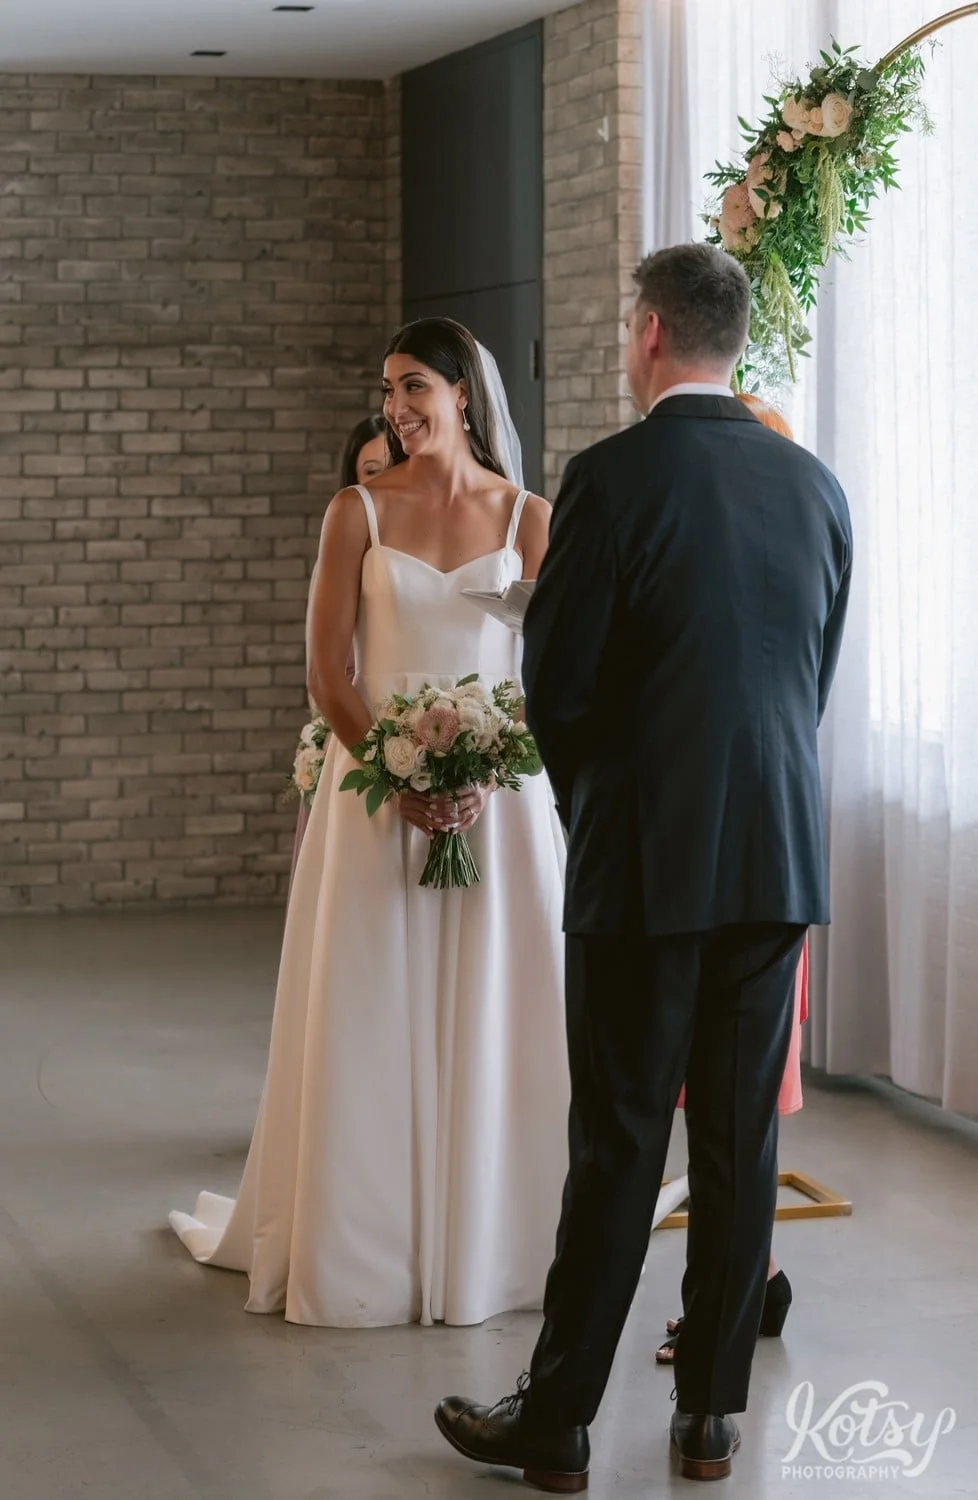 A bride smiles at guests off camera during a Village Loft wedding ceremony in Toronto, Canada